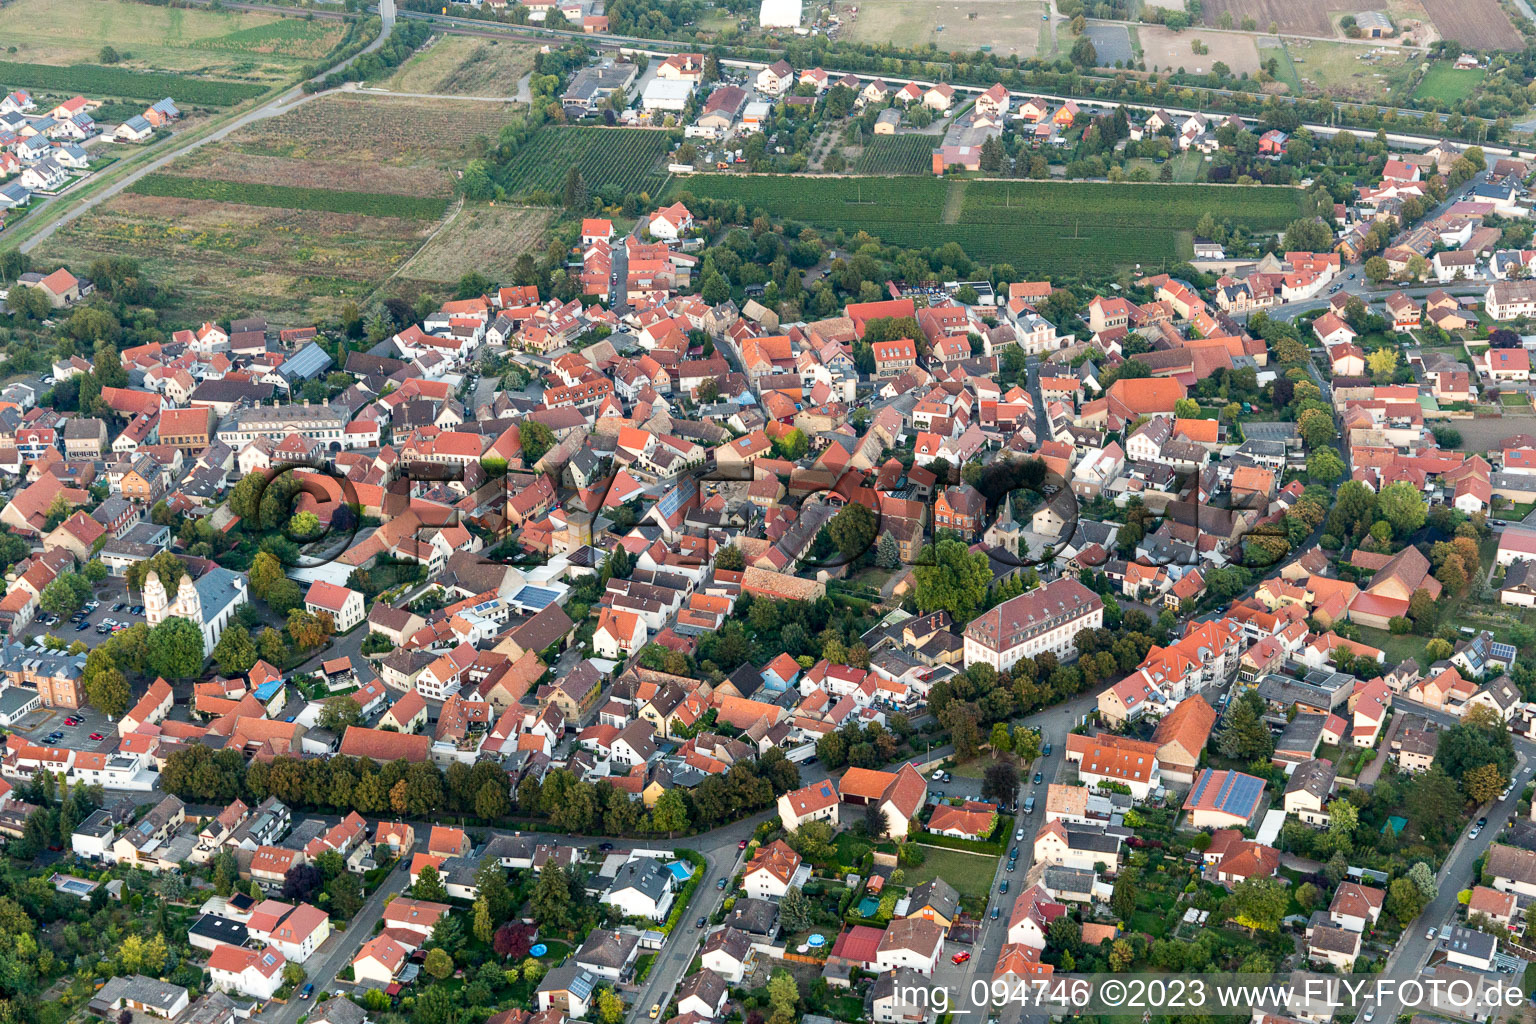 Drone image of Guntersblum in the state Rhineland-Palatinate, Germany